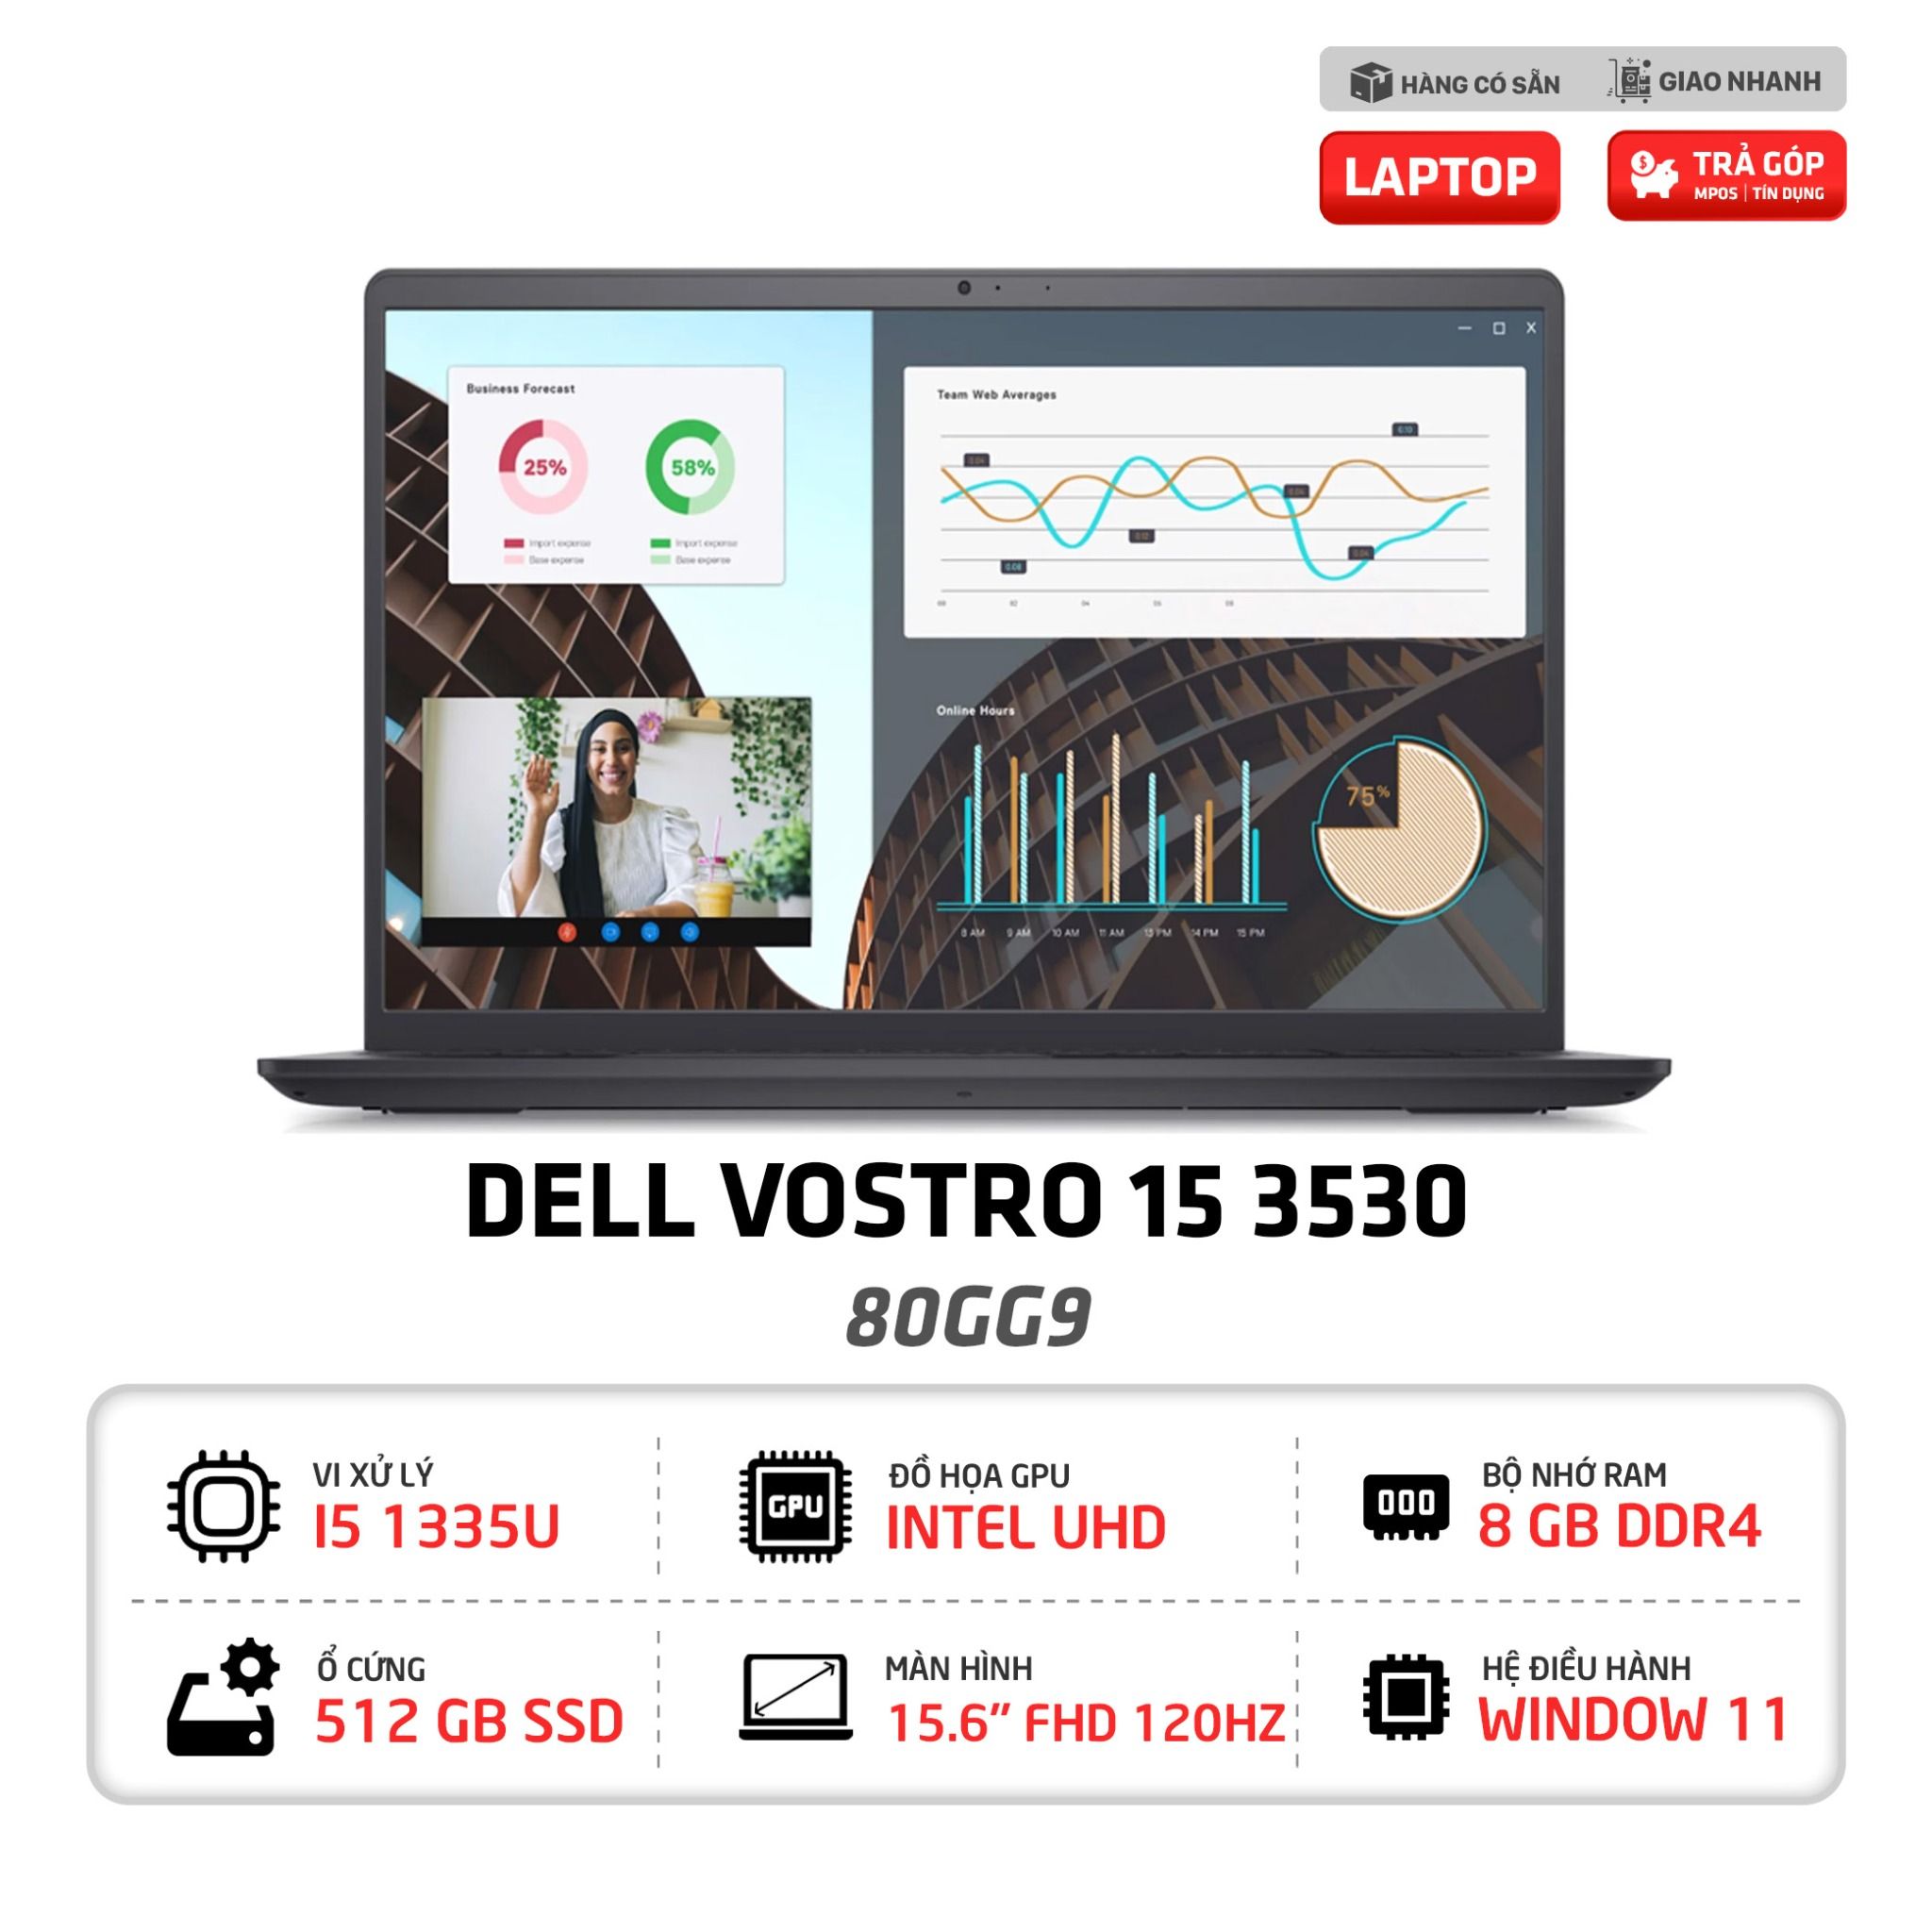 Laptop Dell Vostro 15 3530 80GG9